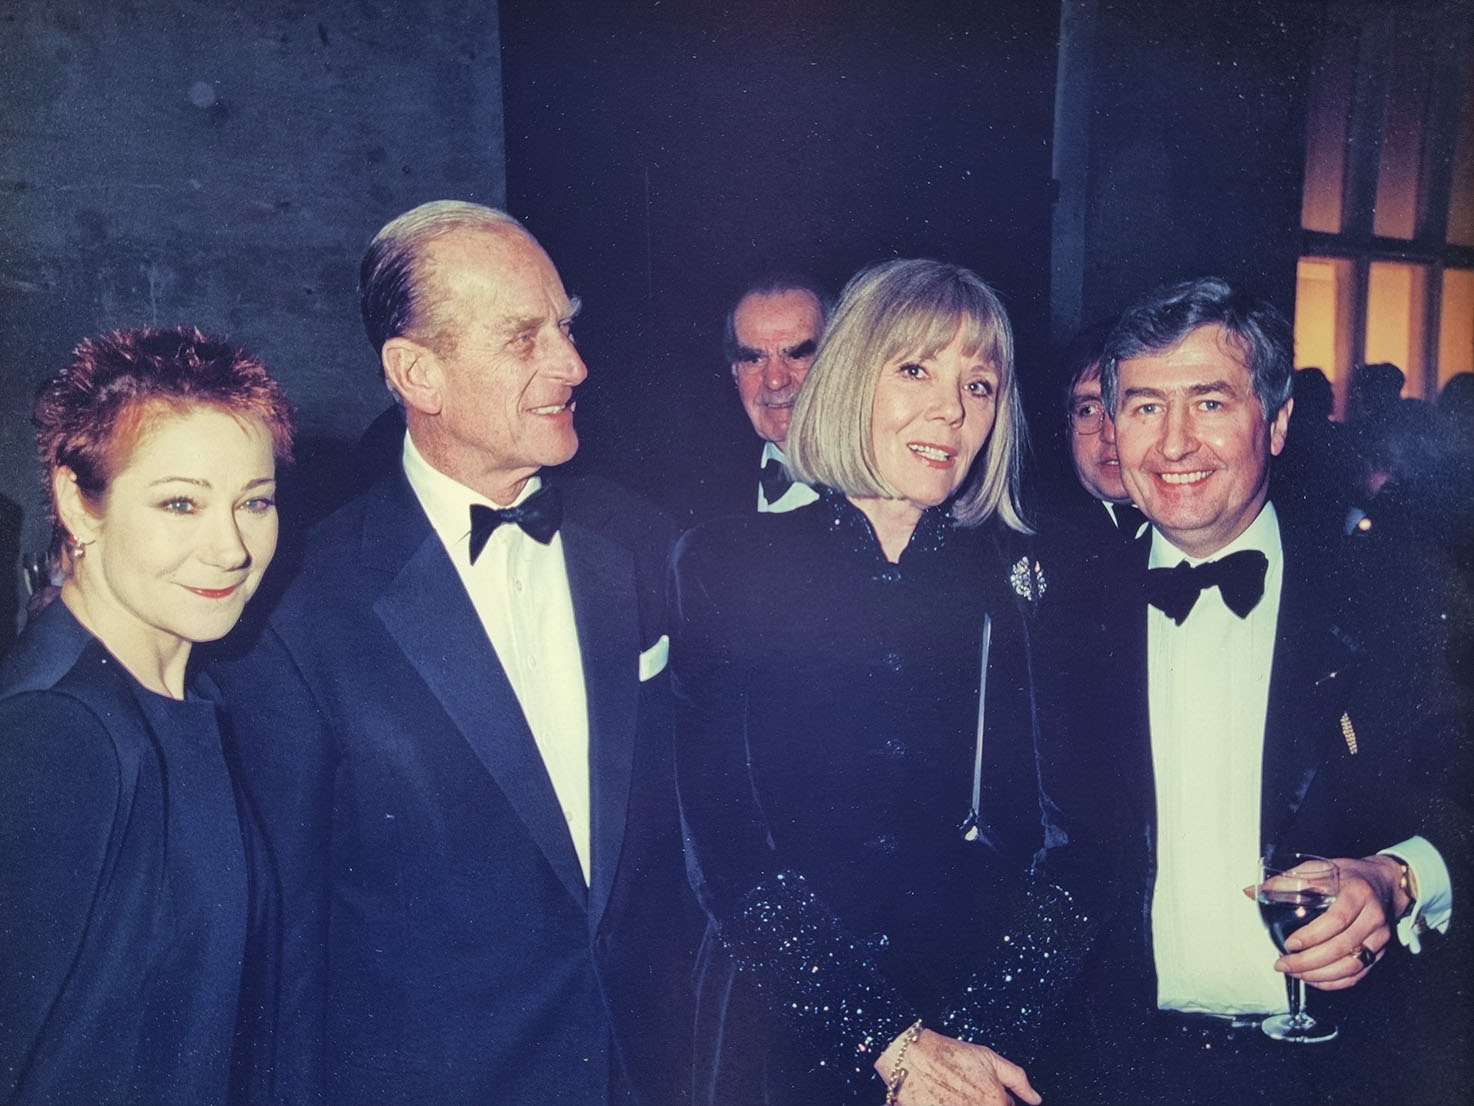  Duke of Edinburgh with Dr. Moran, and actresses Zoe Wanakmaker and Diana Rigg